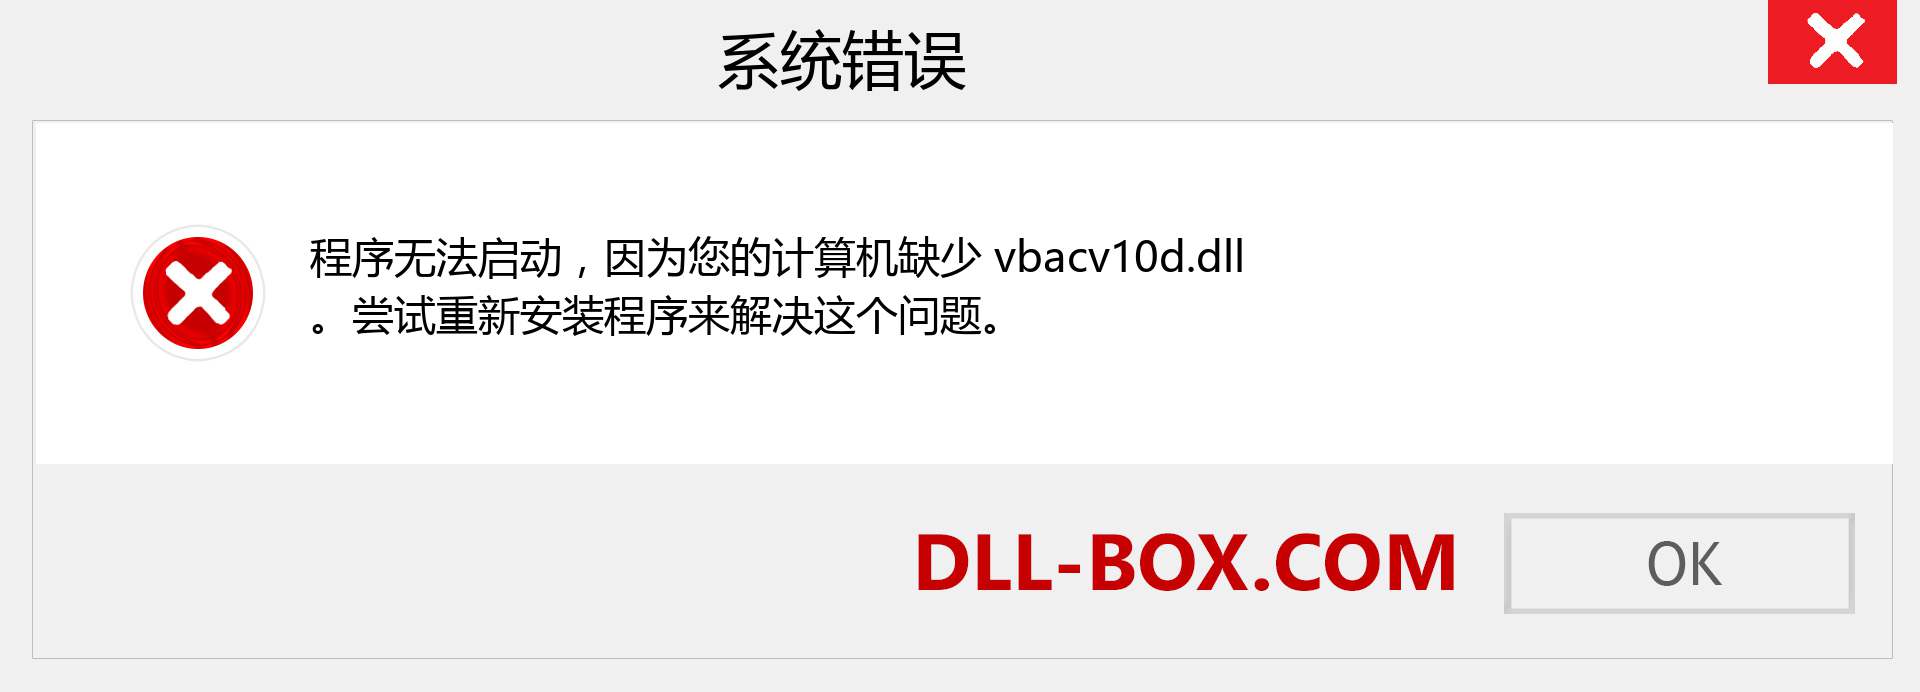 vbacv10d.dll 文件丢失？。 适用于 Windows 7、8、10 的下载 - 修复 Windows、照片、图像上的 vbacv10d dll 丢失错误